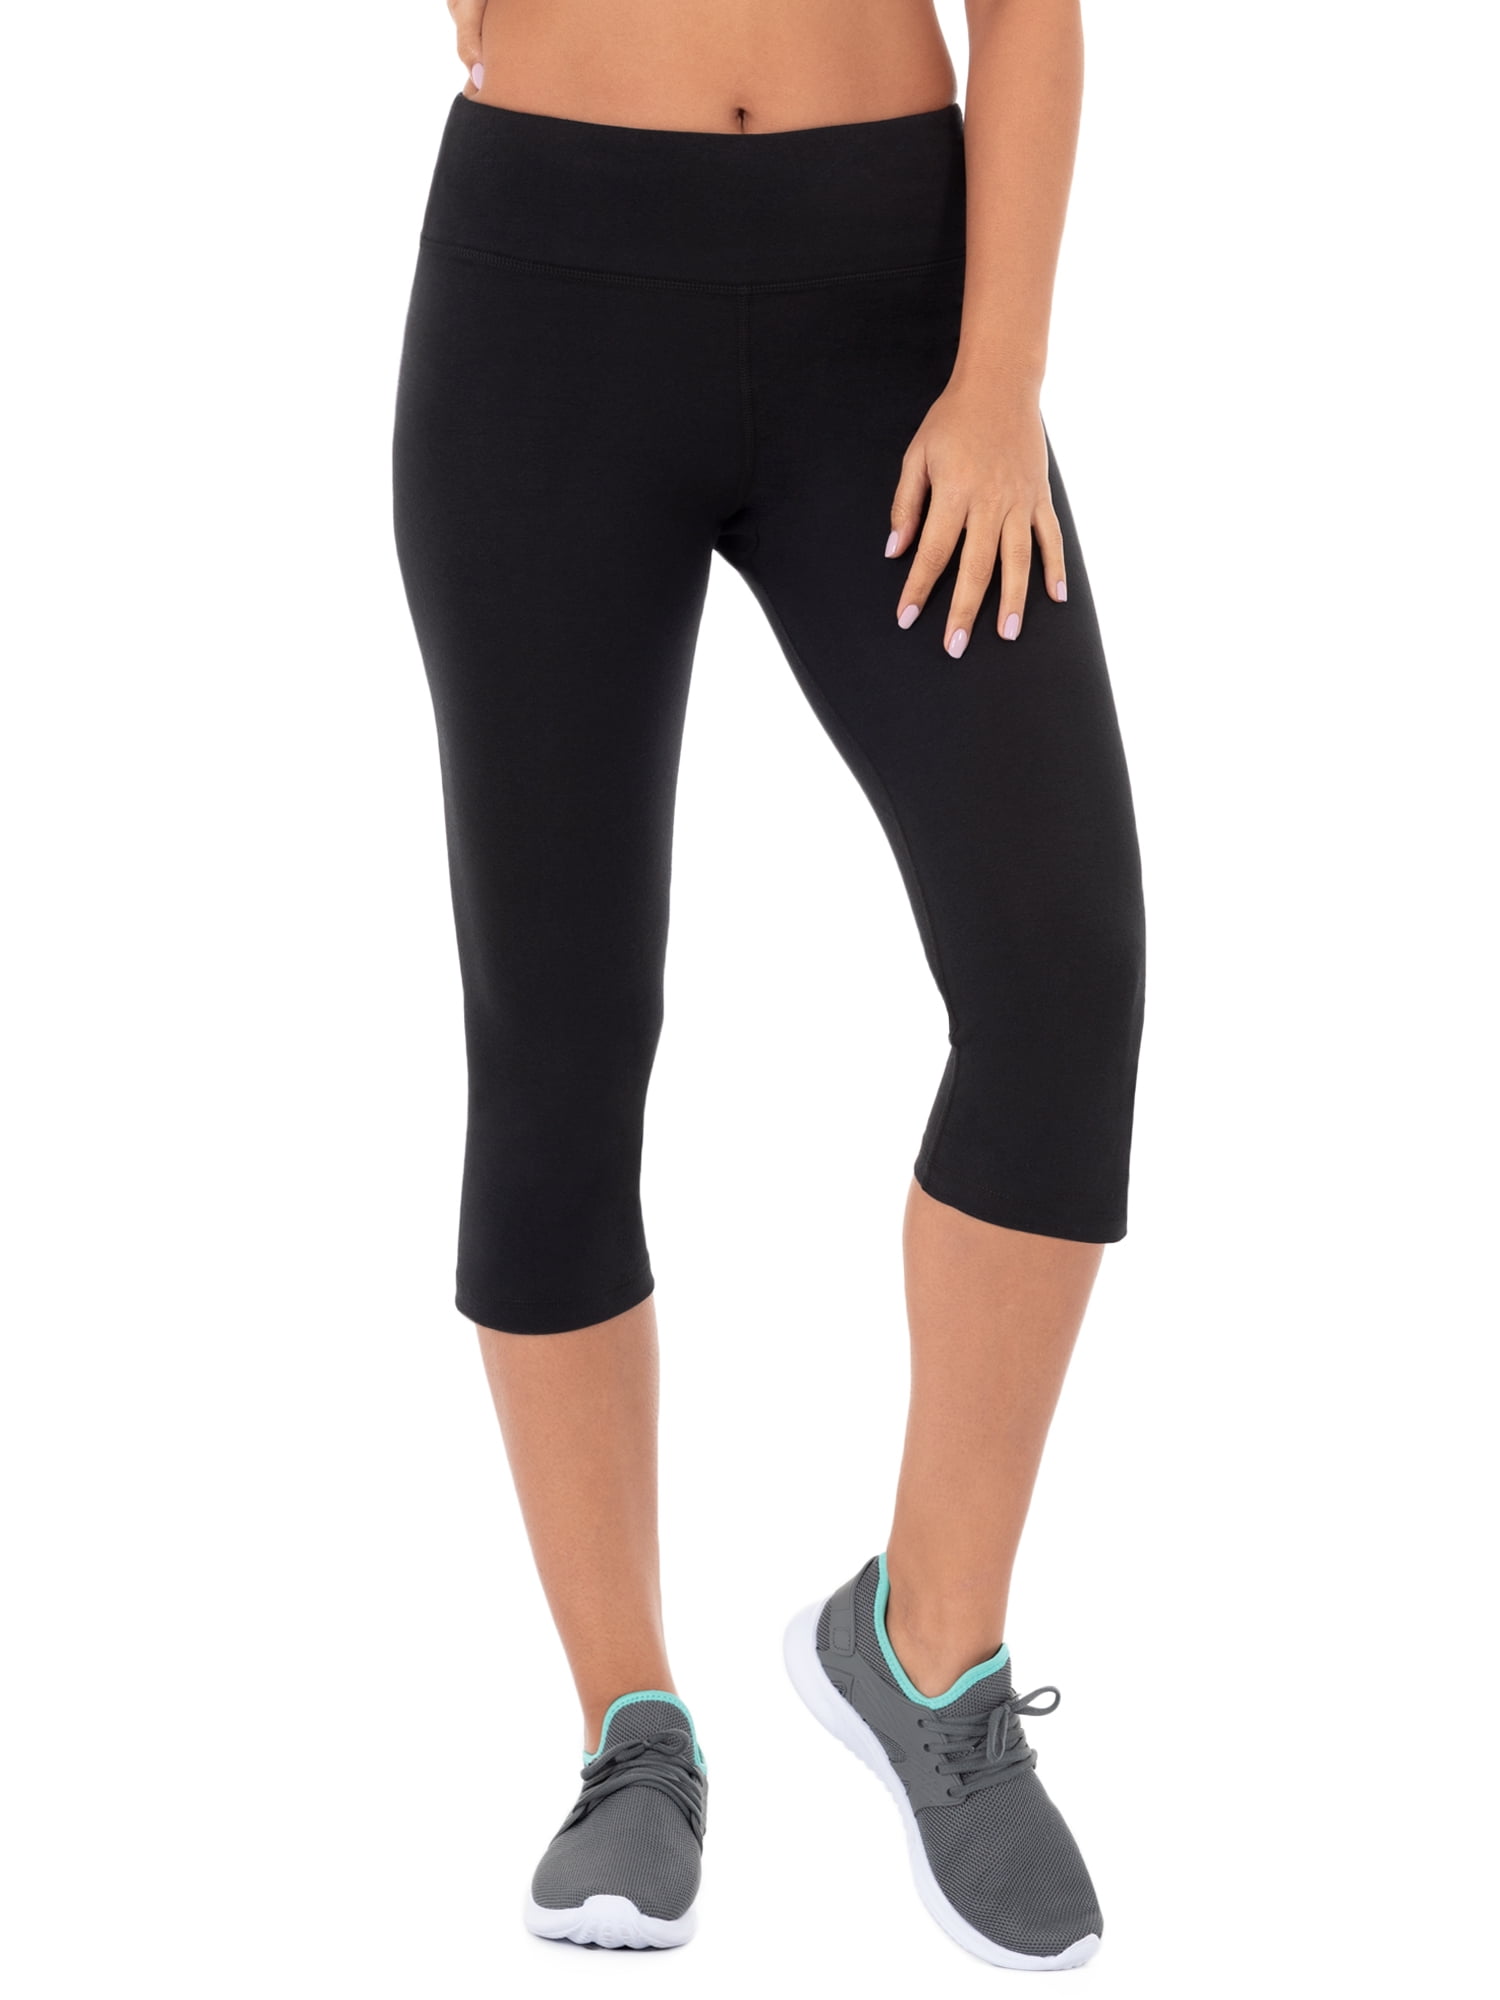 Sugar Pocket Womens Outdoor Capris Fitness Tights Leggings Walking Running Yoga Pants 